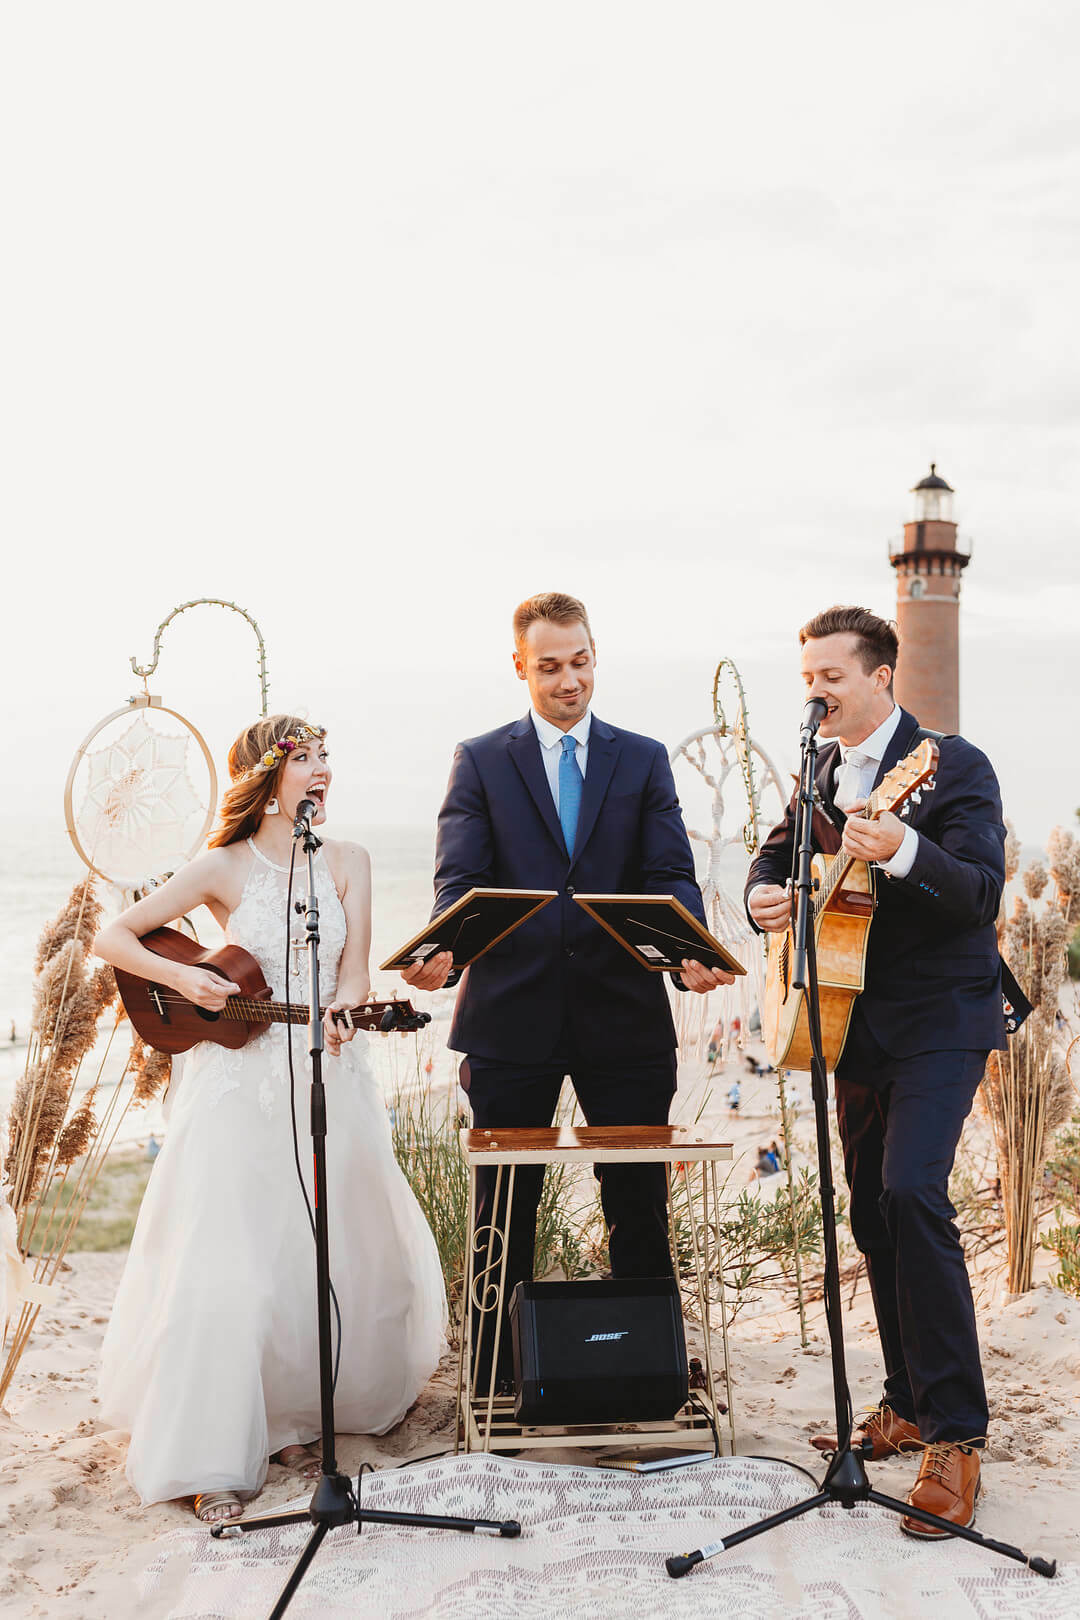 Sing your wedding vows | Alternative wedding ideas